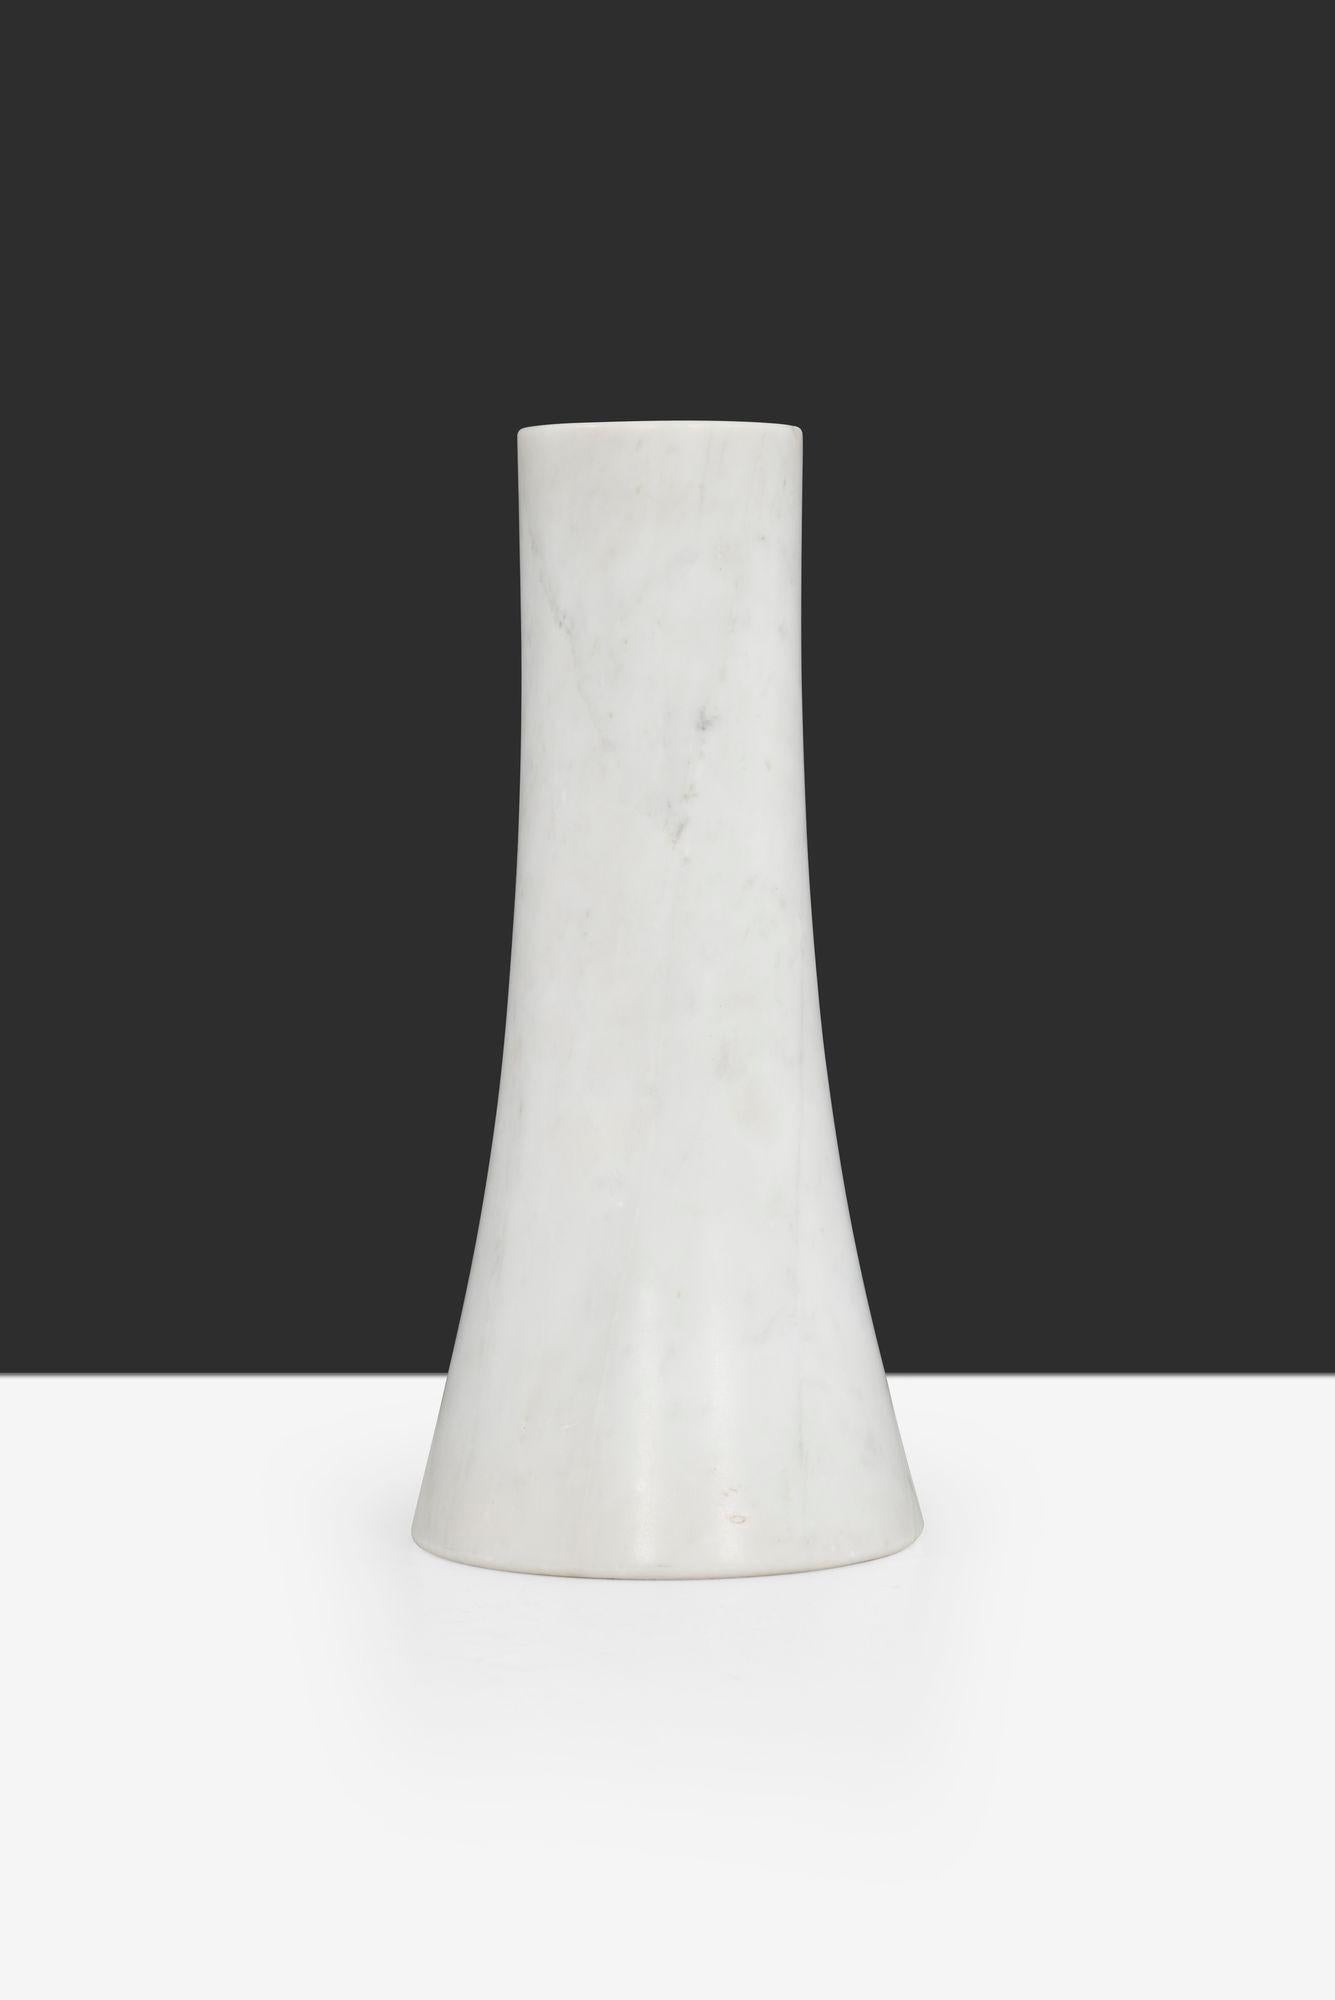 Angelo Mangiarotti for Skipper vase in Carrara Marble.